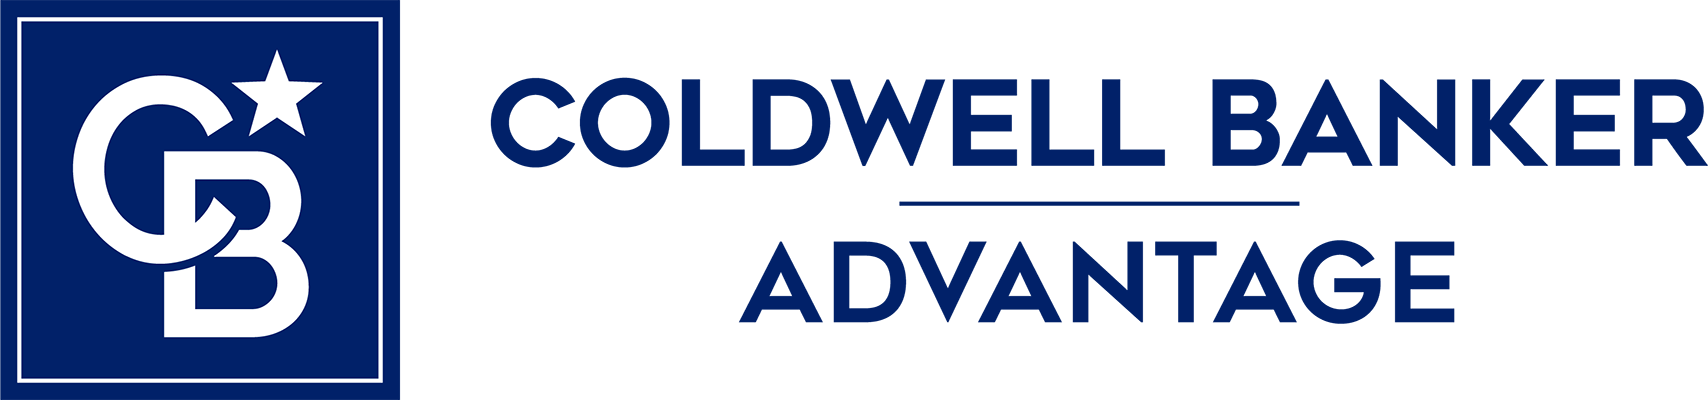 Susan LaRose - Coldwell Banker Advantage Logo